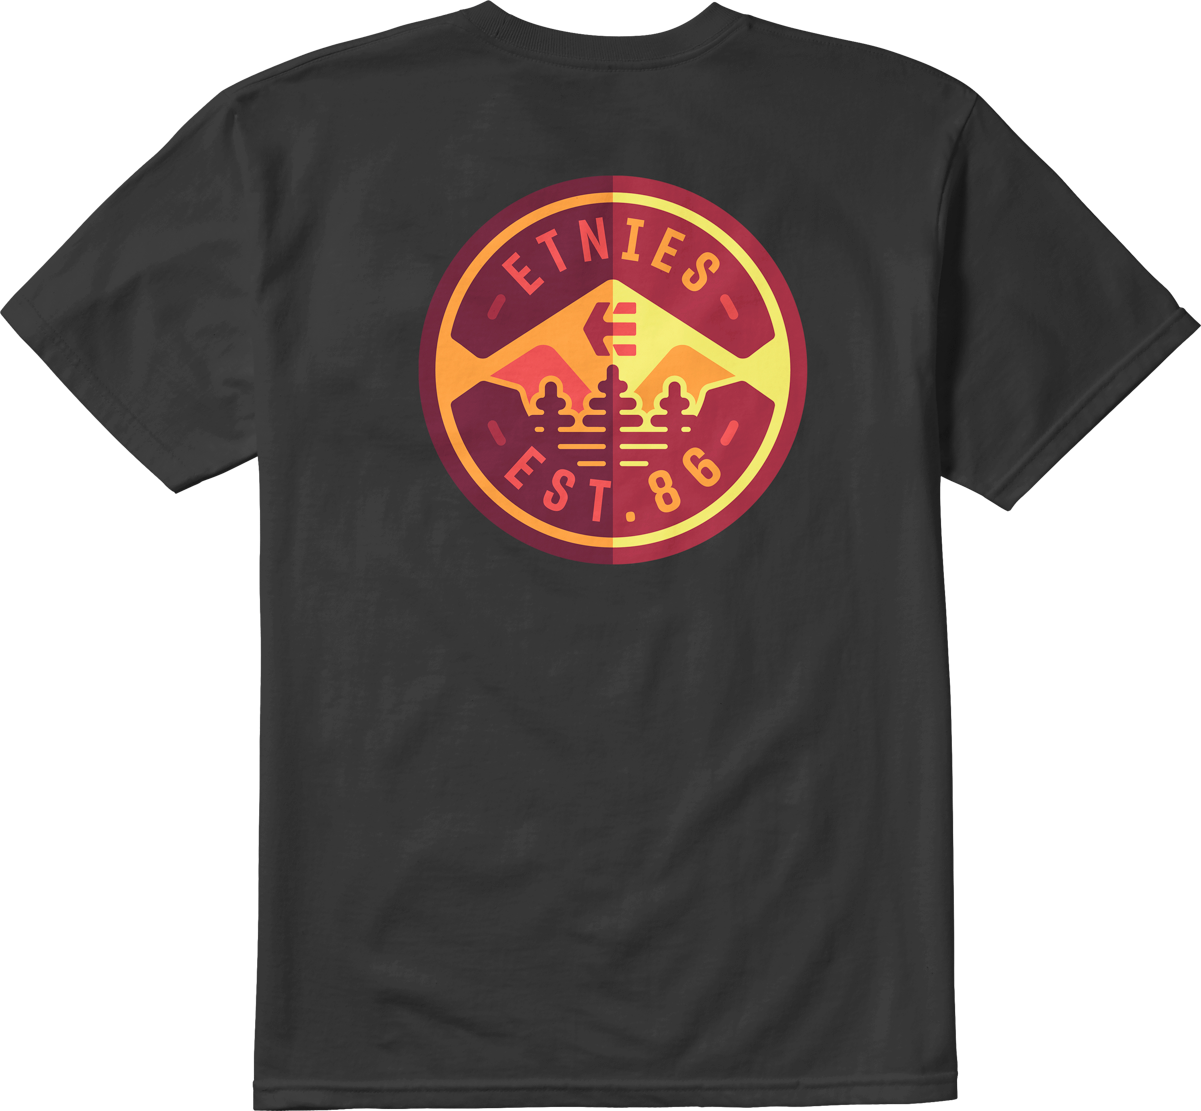 Etnies Mens 3 Pines Tee Black T-Shirt